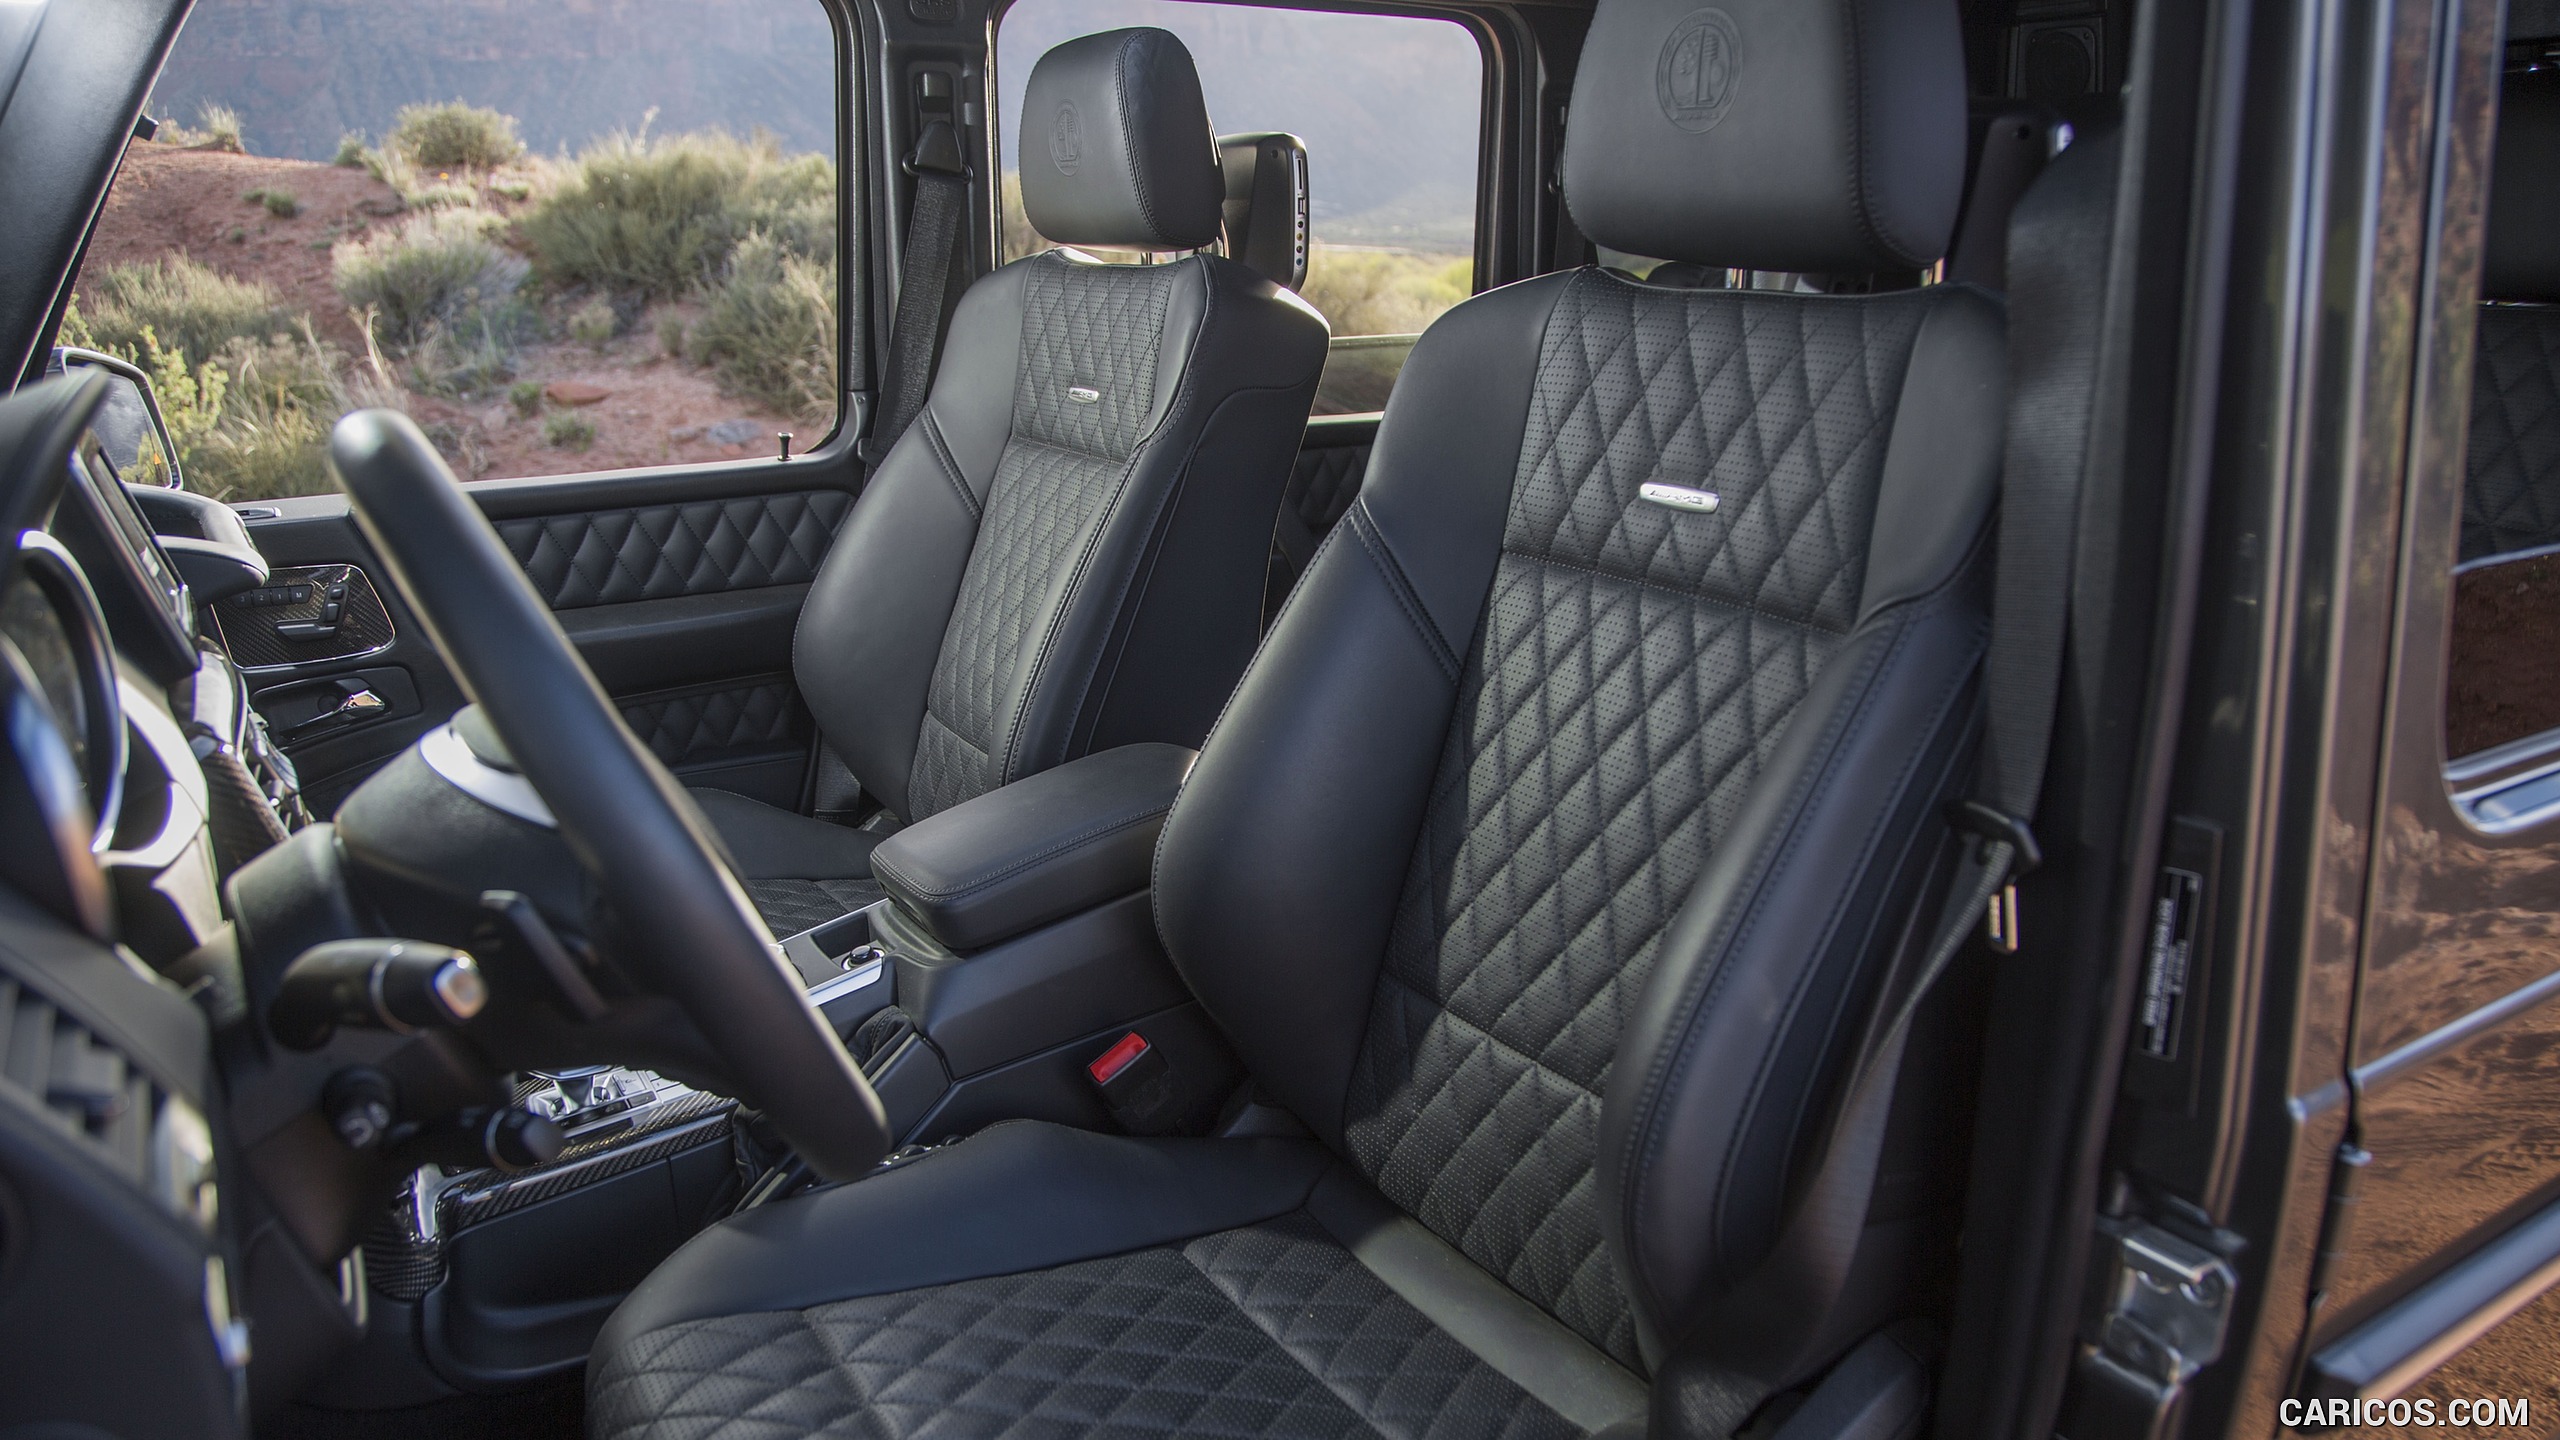 2016 Mercedes-AMG G65 (US-Spec) - Interior, Front Seats, #36 of 41